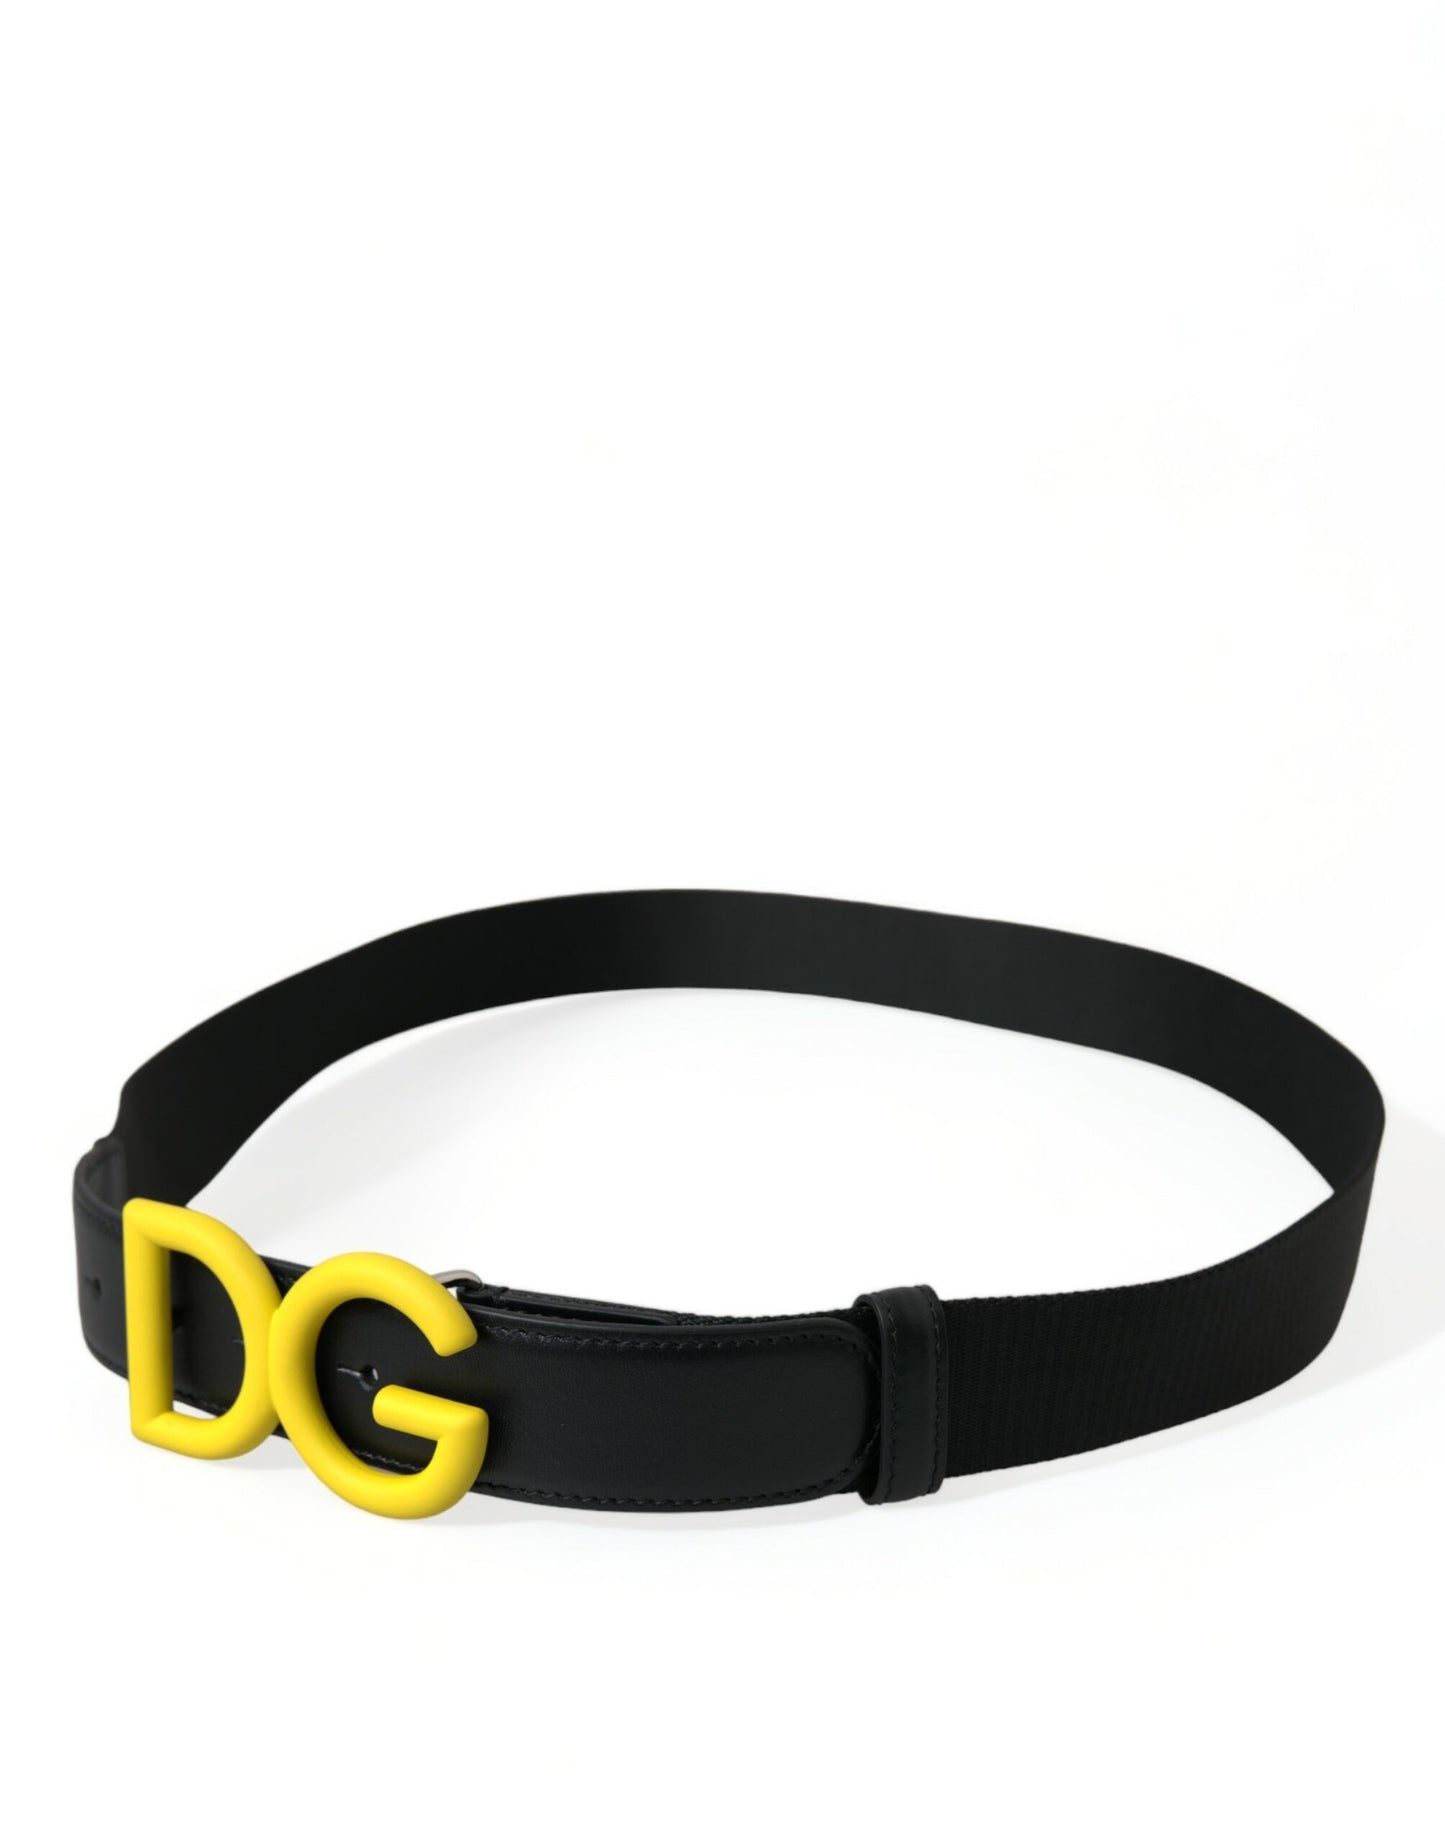 Dolce & Gabbana Elegant Black and Yellow Designer Belt